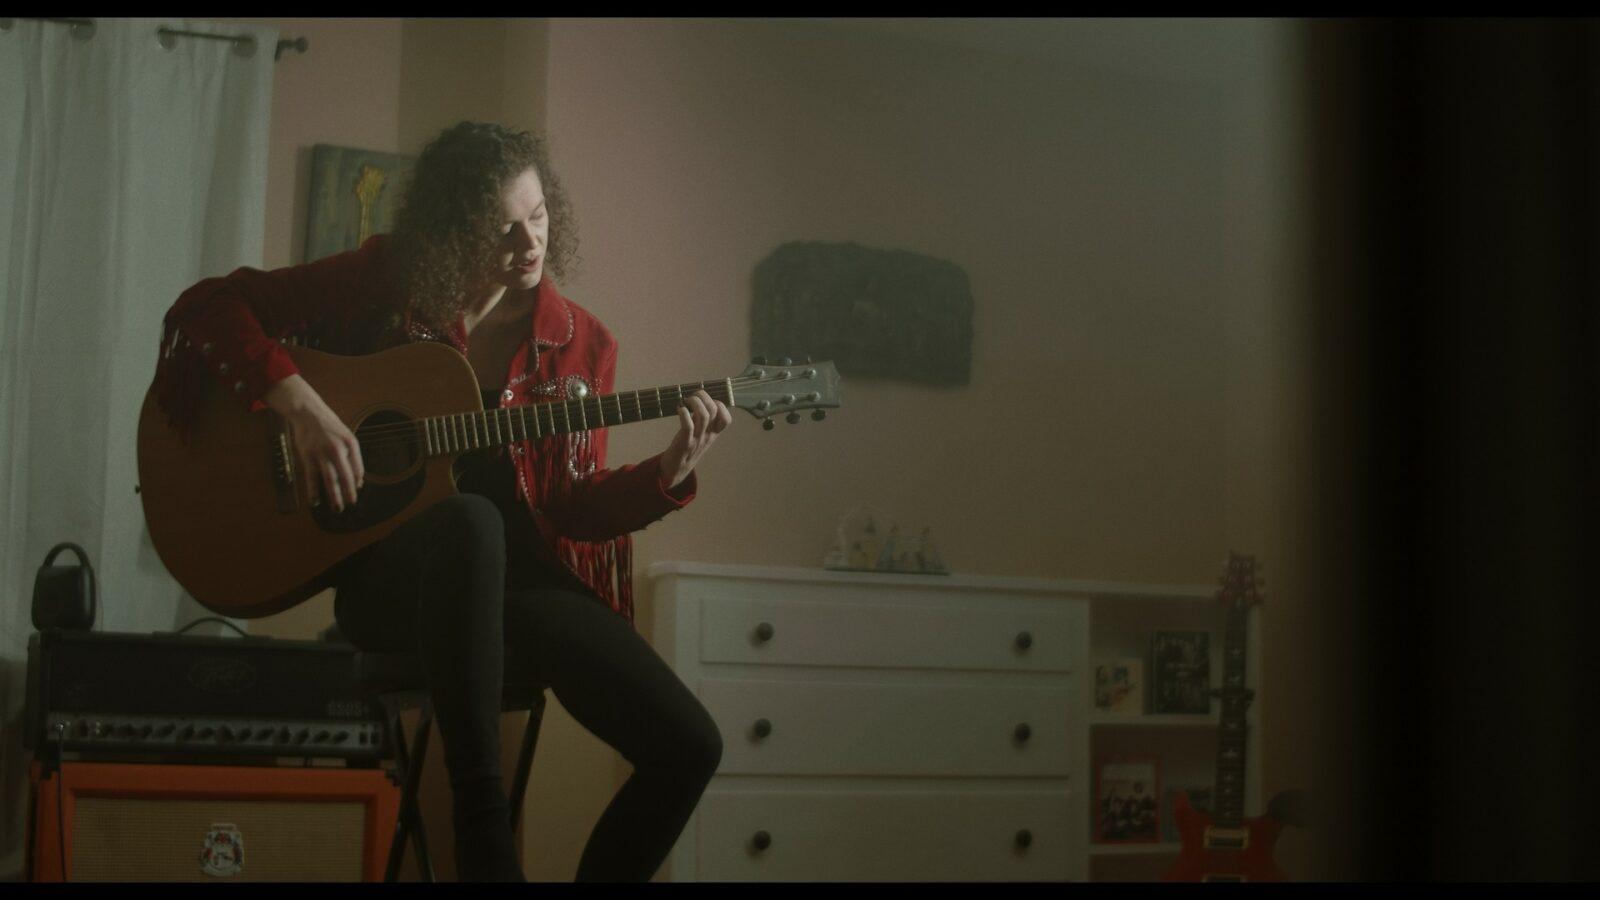 A woman play a guitar